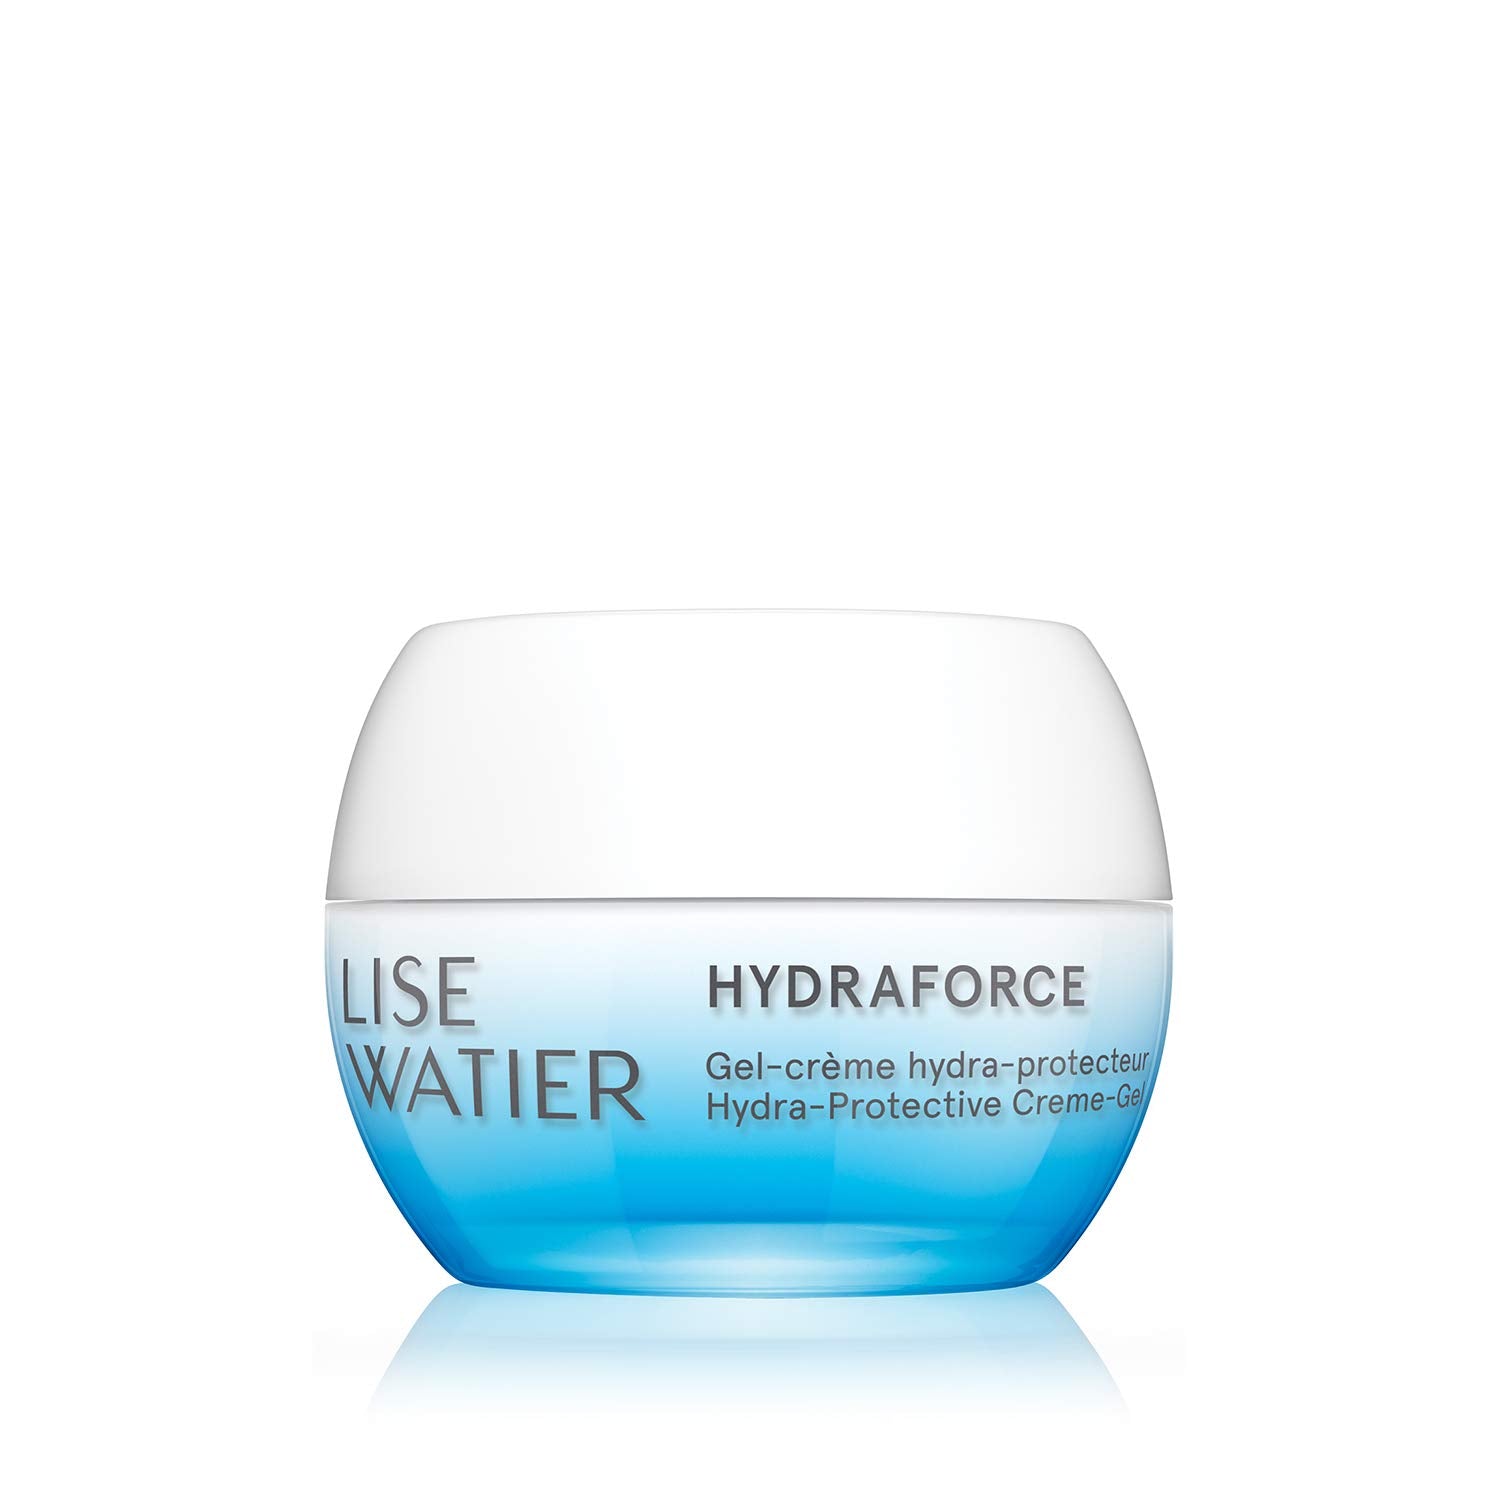 Lise Watier HydraForce Hydra-Protective Creme-Gel, 45 ml.